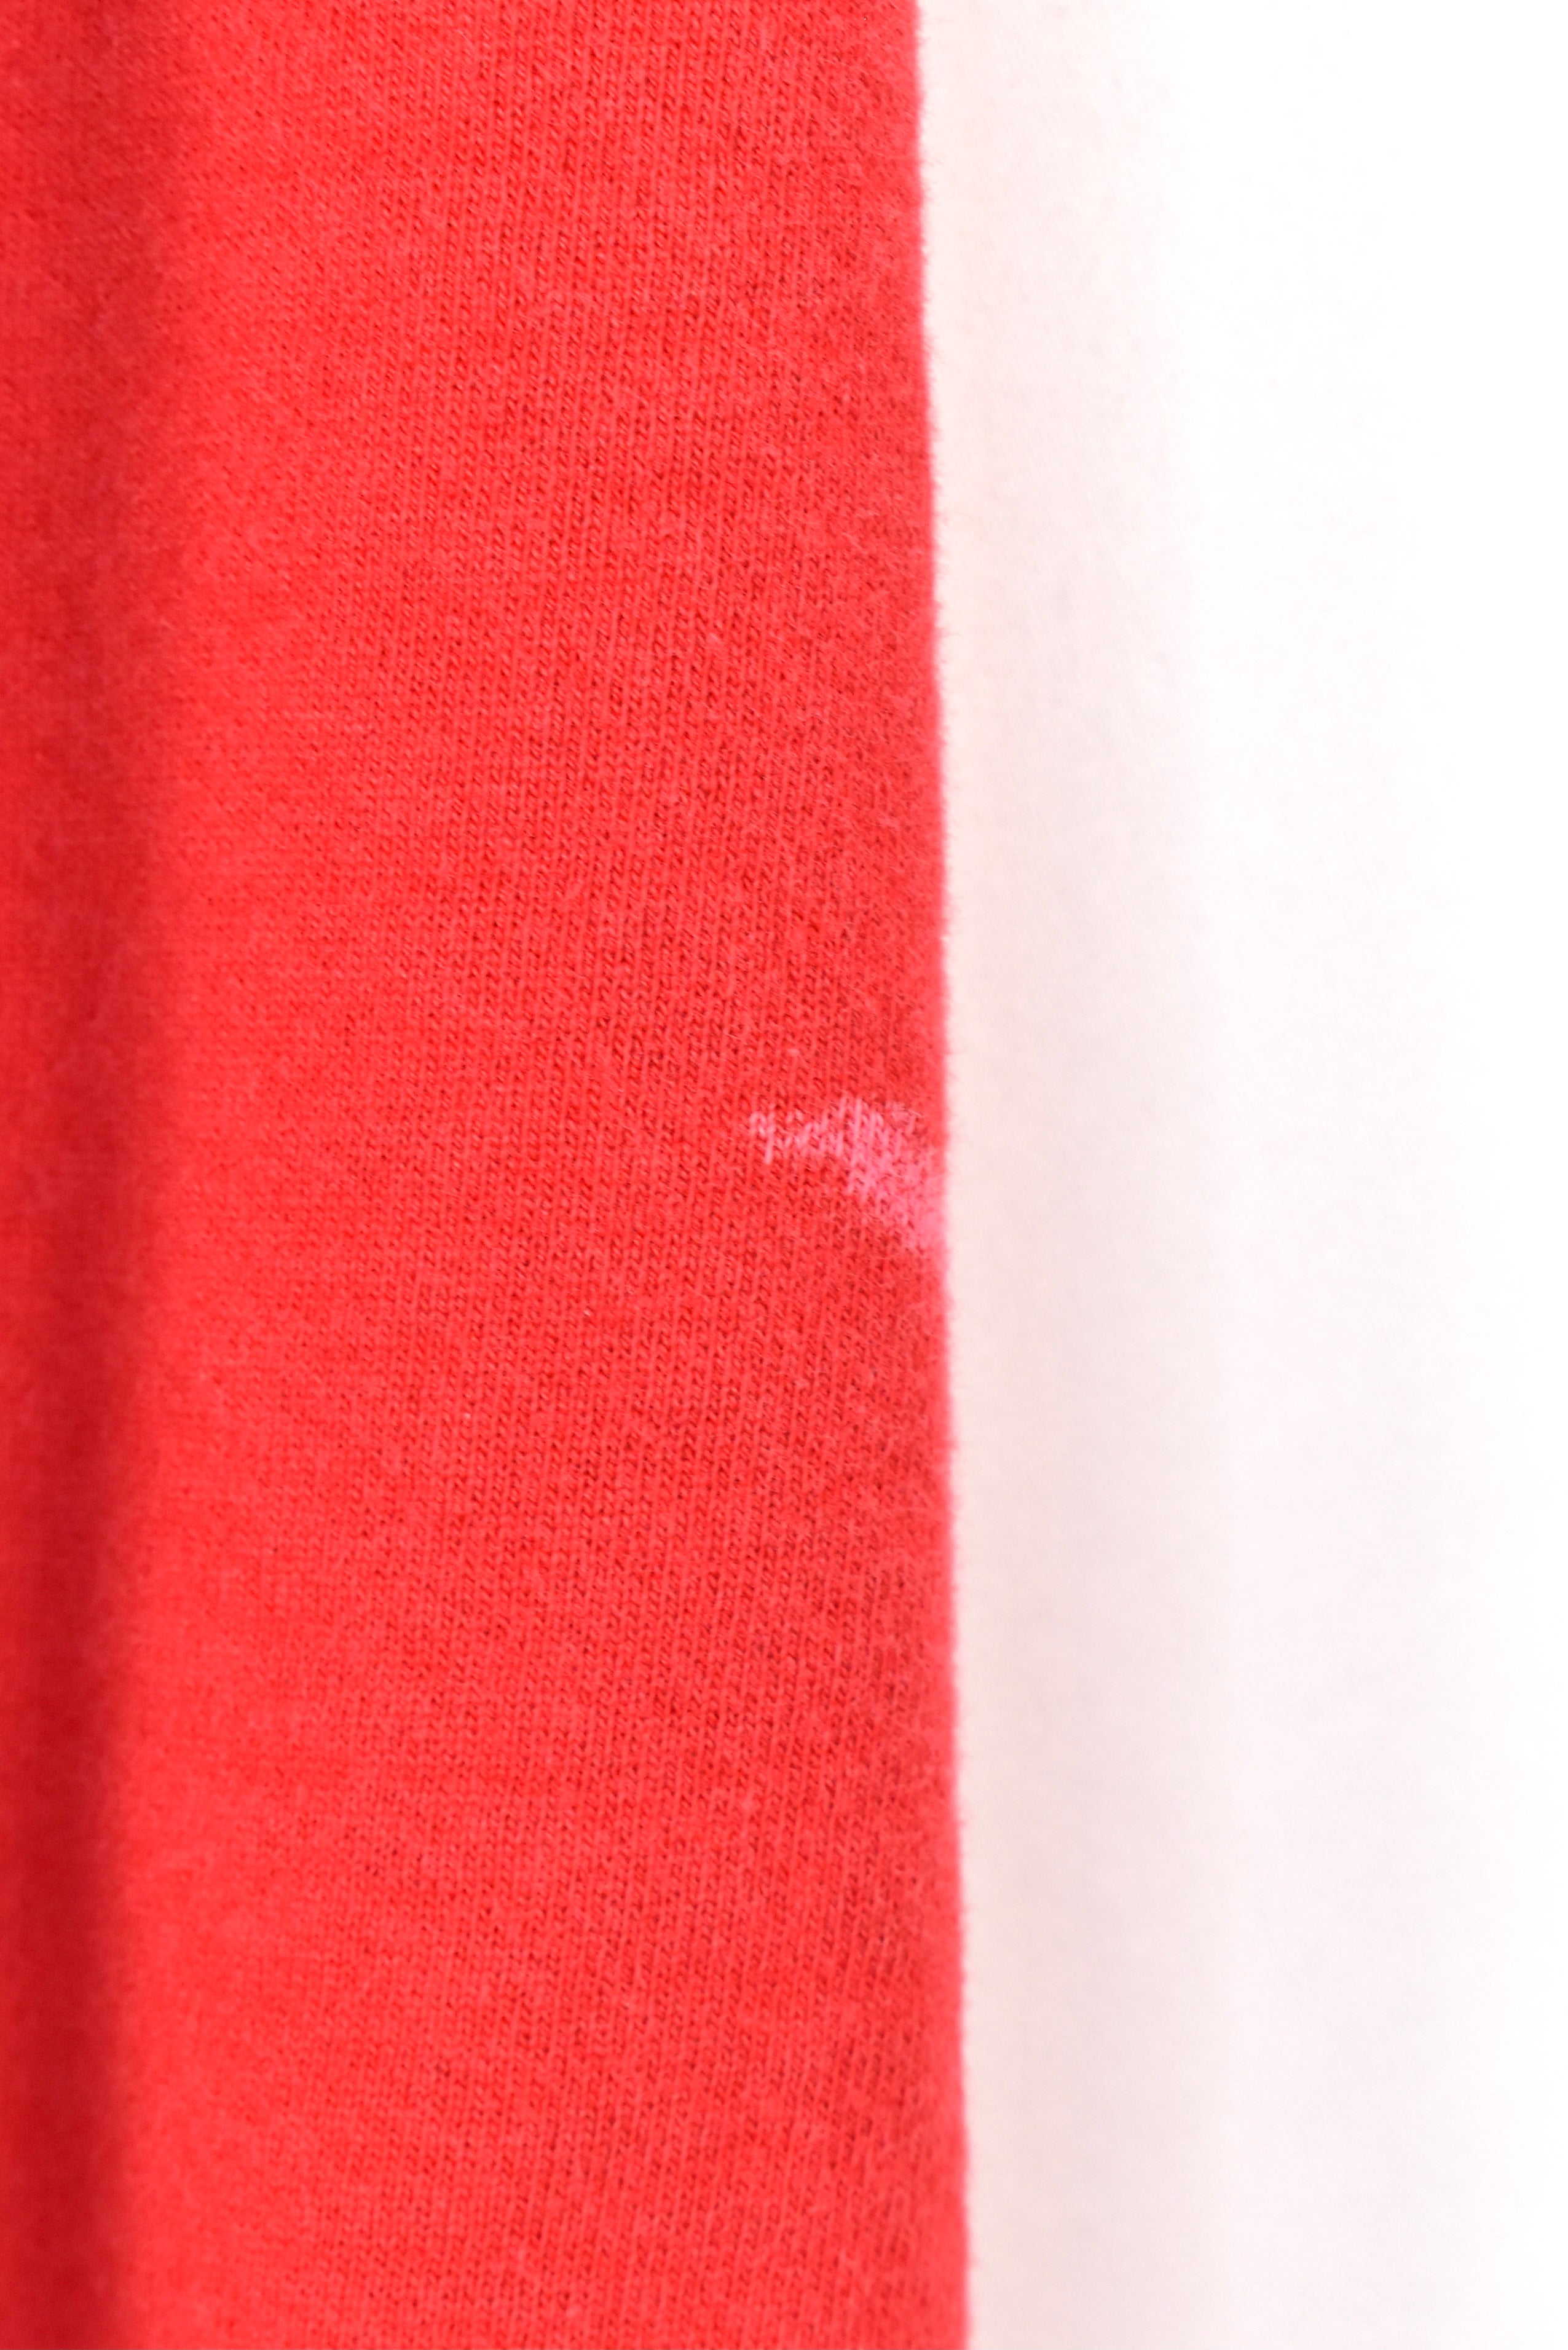 VINTAGE NEBRASKA UNIVERSITY EMBROIDERED RED SWEATSHIRT | SMALL COLLEGE